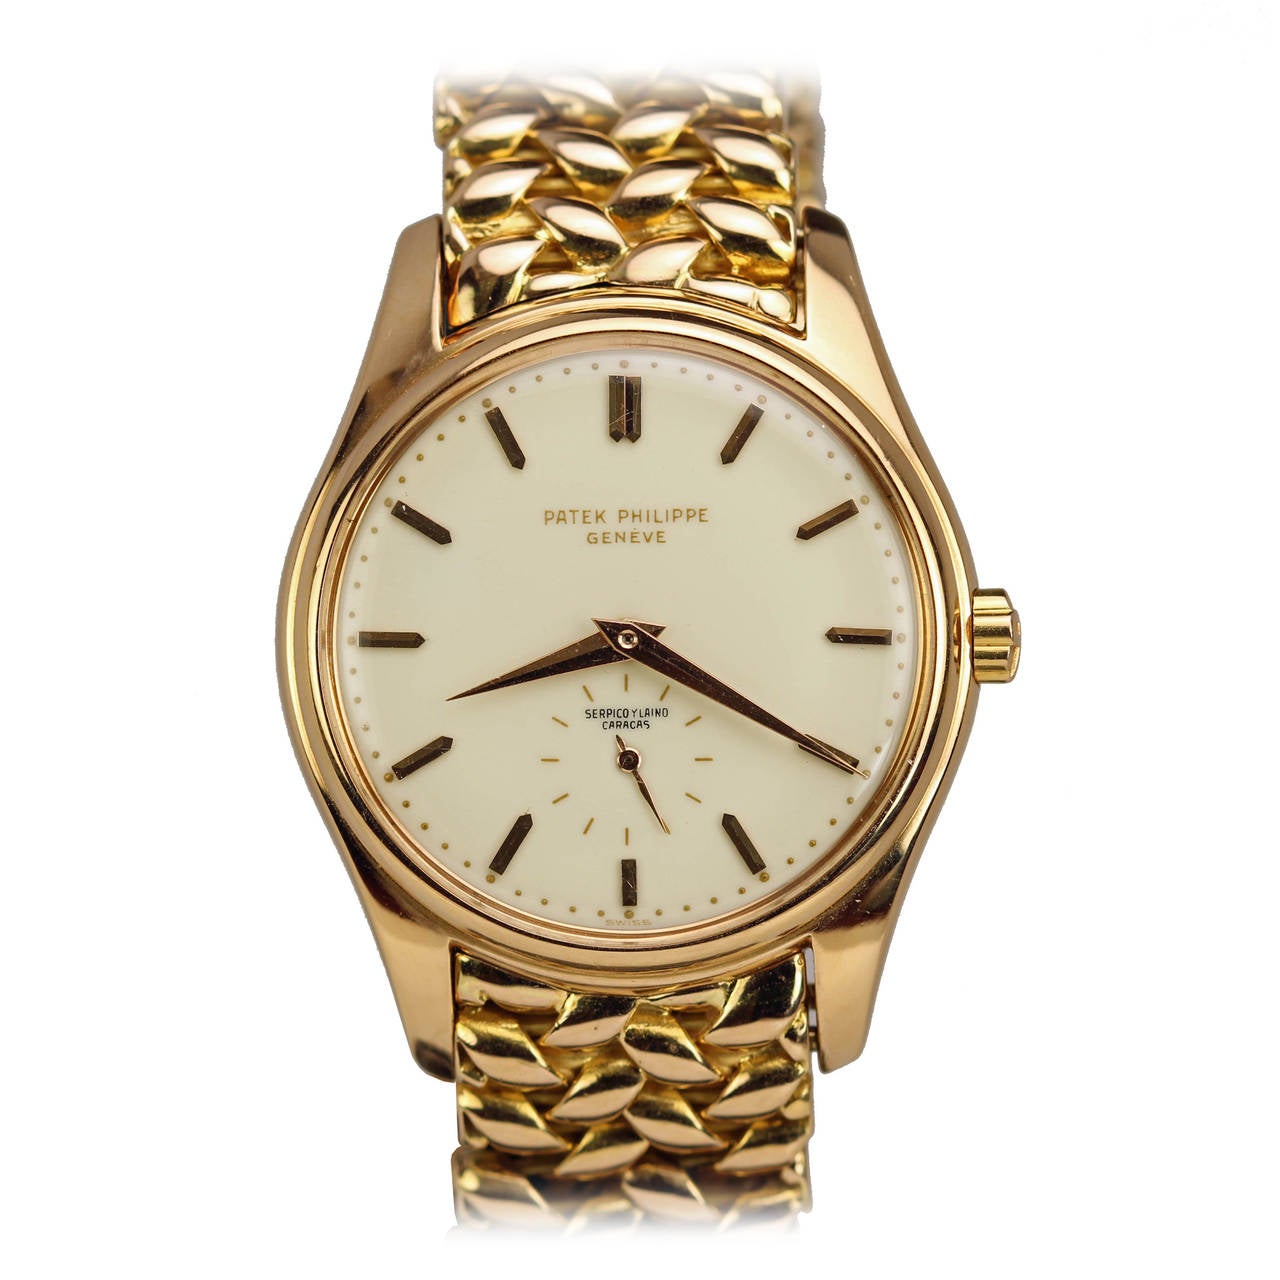 Patek Philippe Rose Gold Serpico de Laino Wristwatch Ref 2526